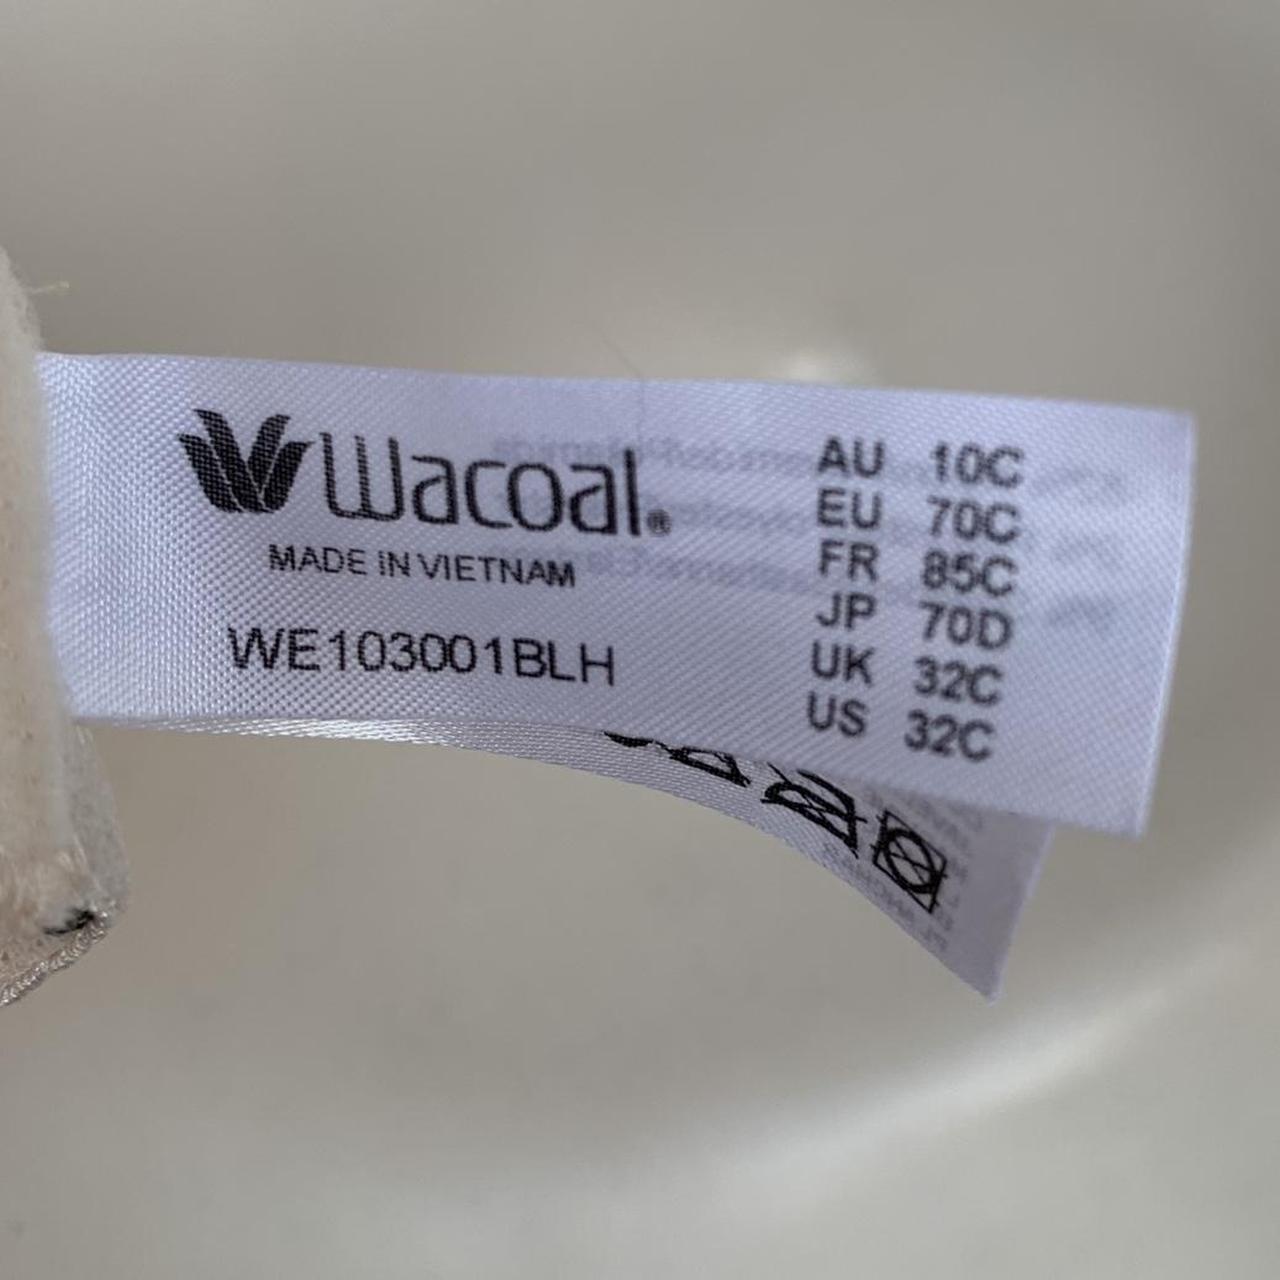 Wacoal Scalloped Lace Bra Cute double strap detail - Depop